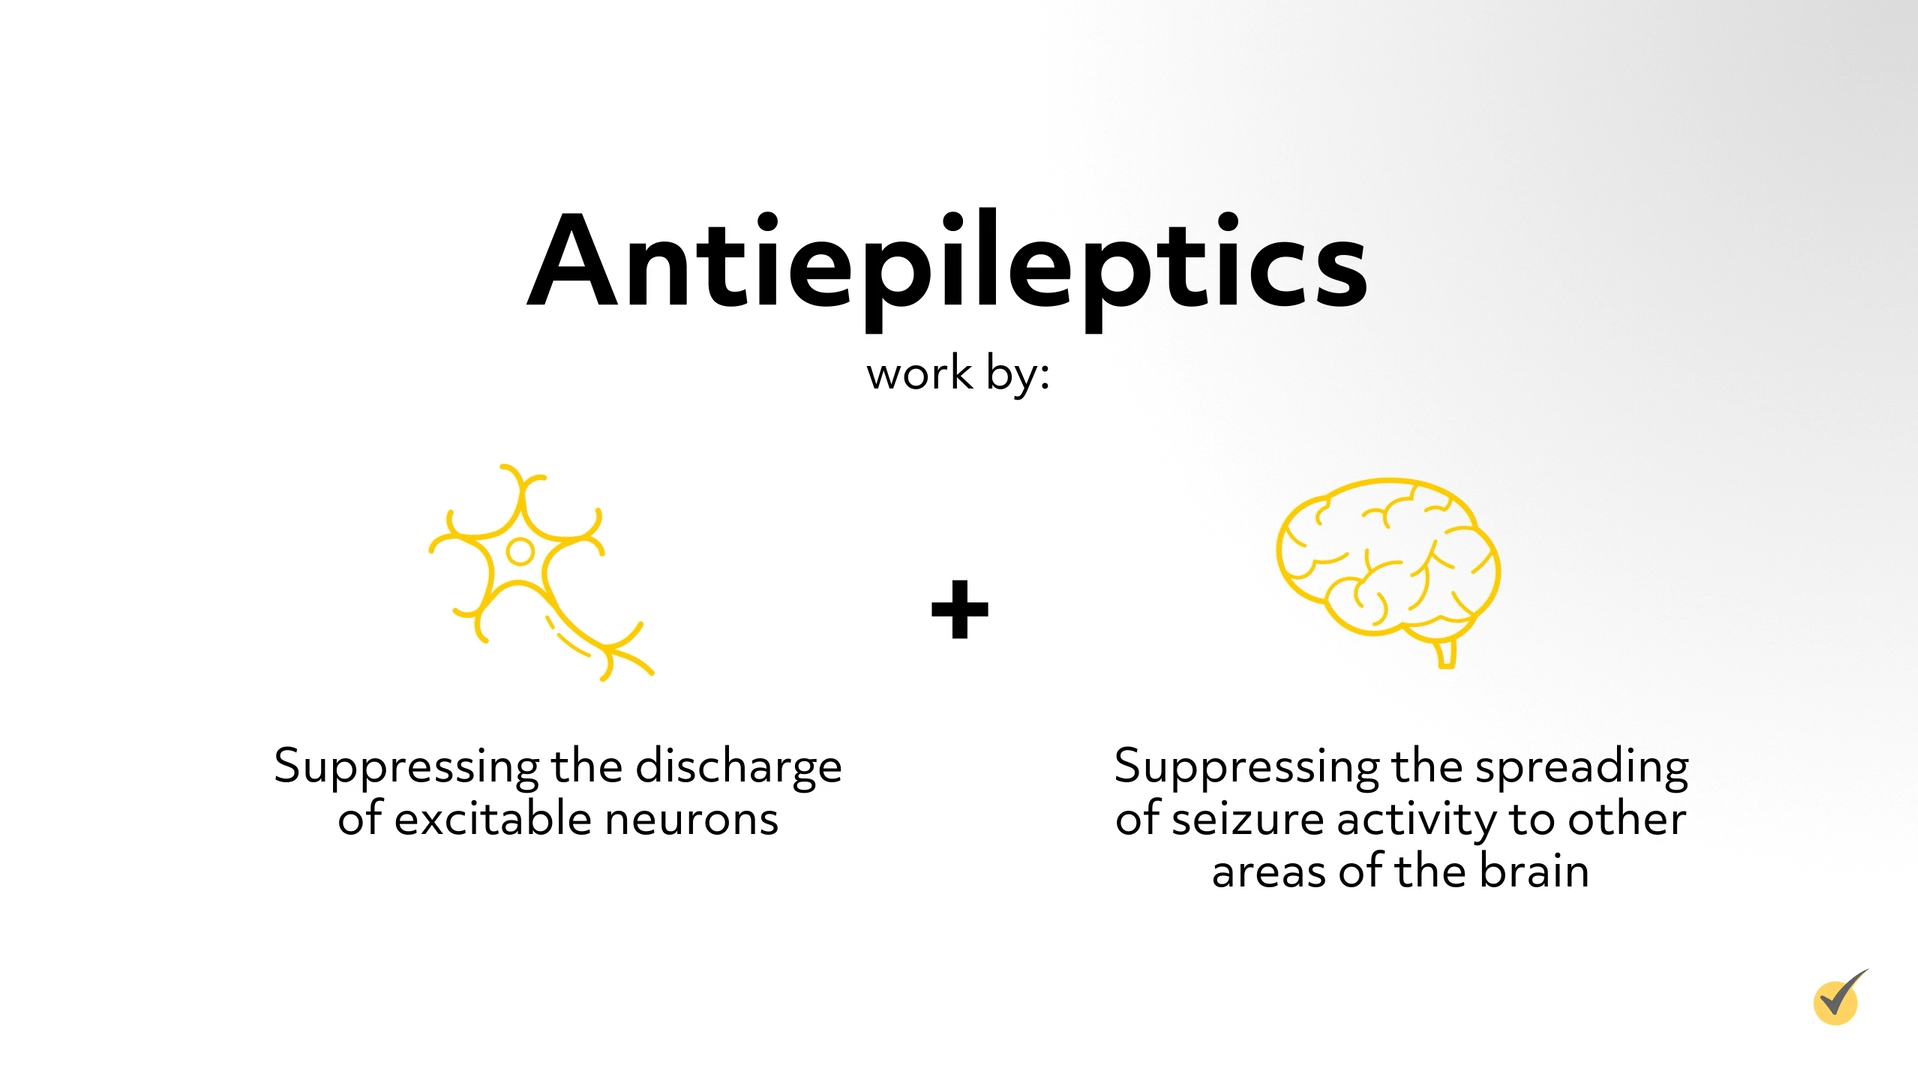 How antiepileptics work